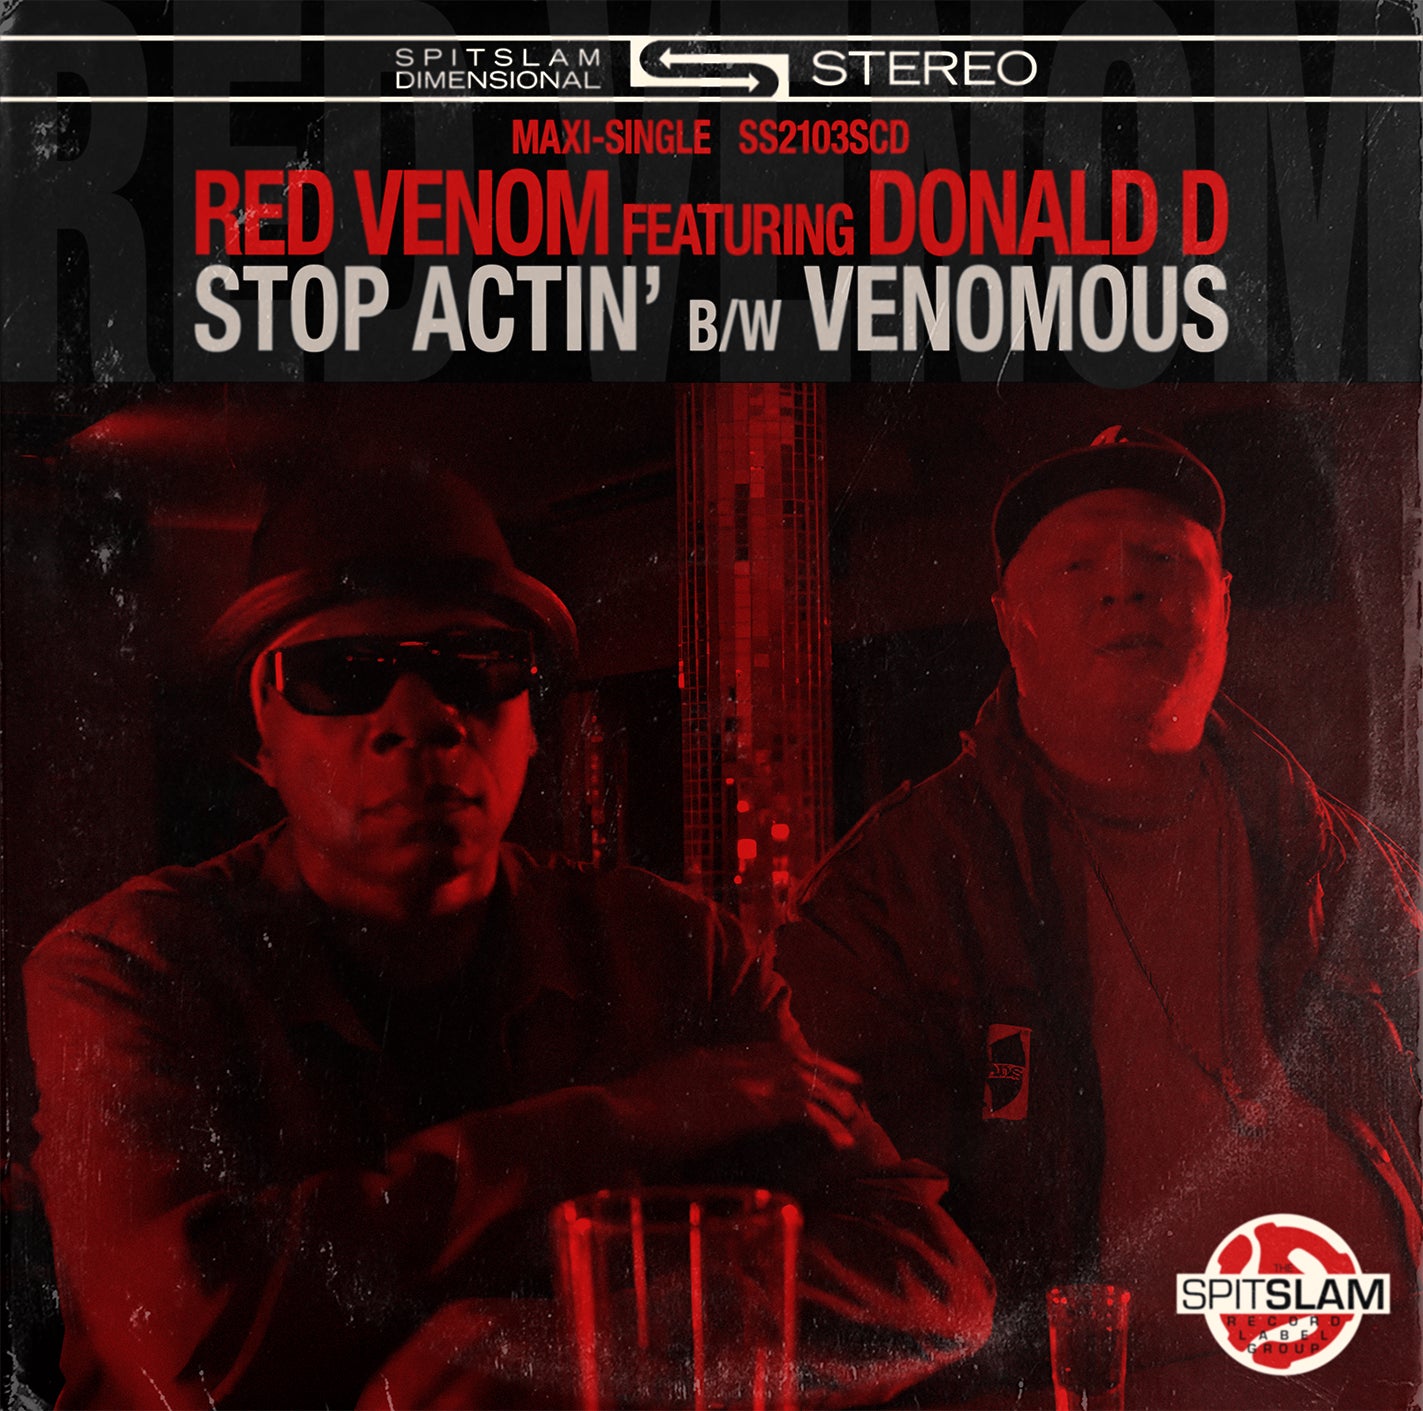 Red Venom - Stop Actin' / Venomous (CD-R Maxi-Single)